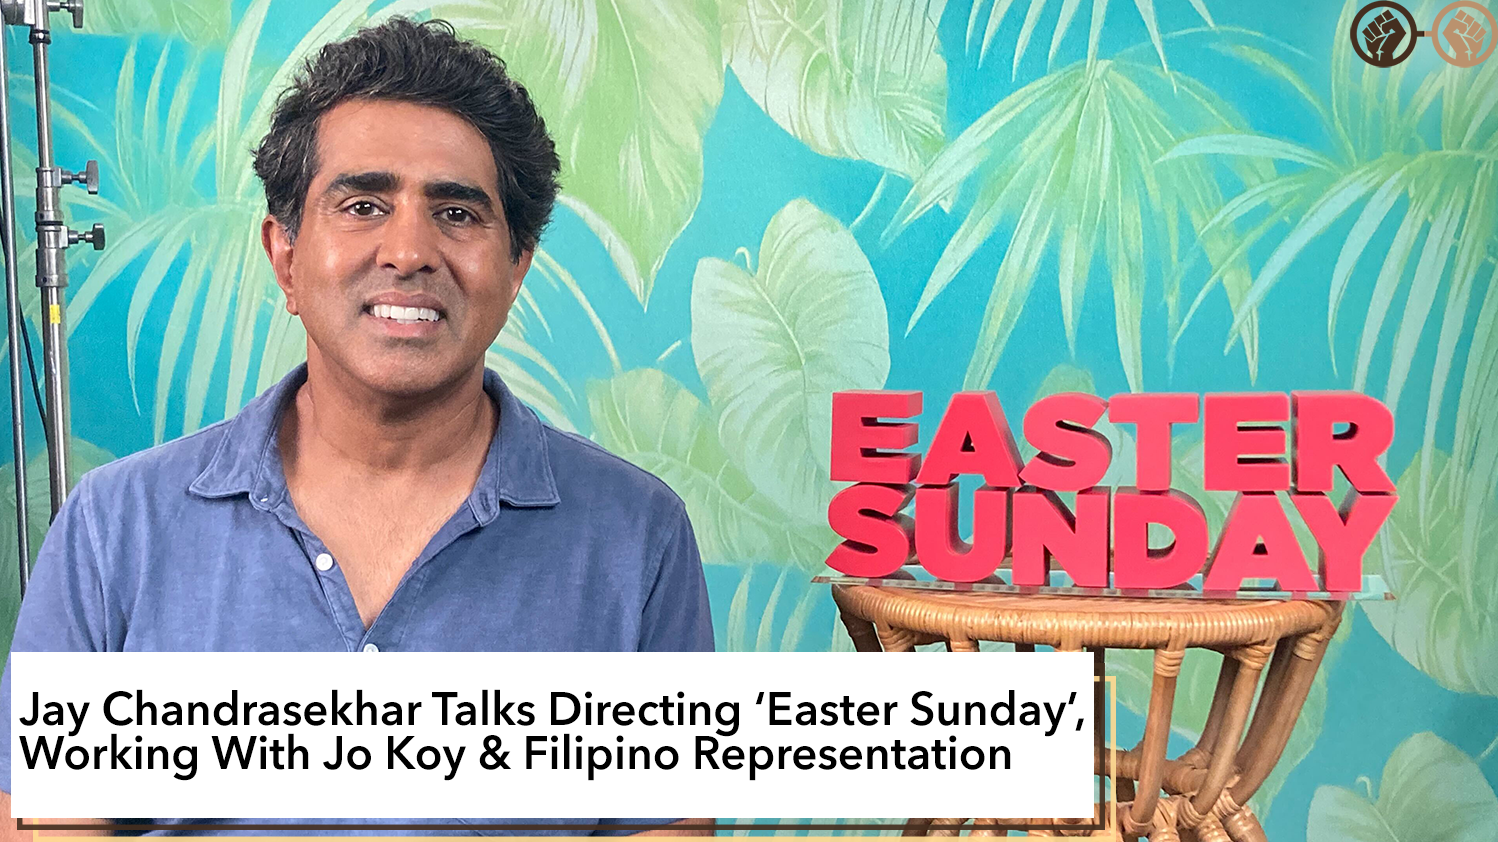 Interview: Jay Chandrasekhar Talks Directing ‘Easter Sunday’, Working With Jo Koy & Filipino Representation